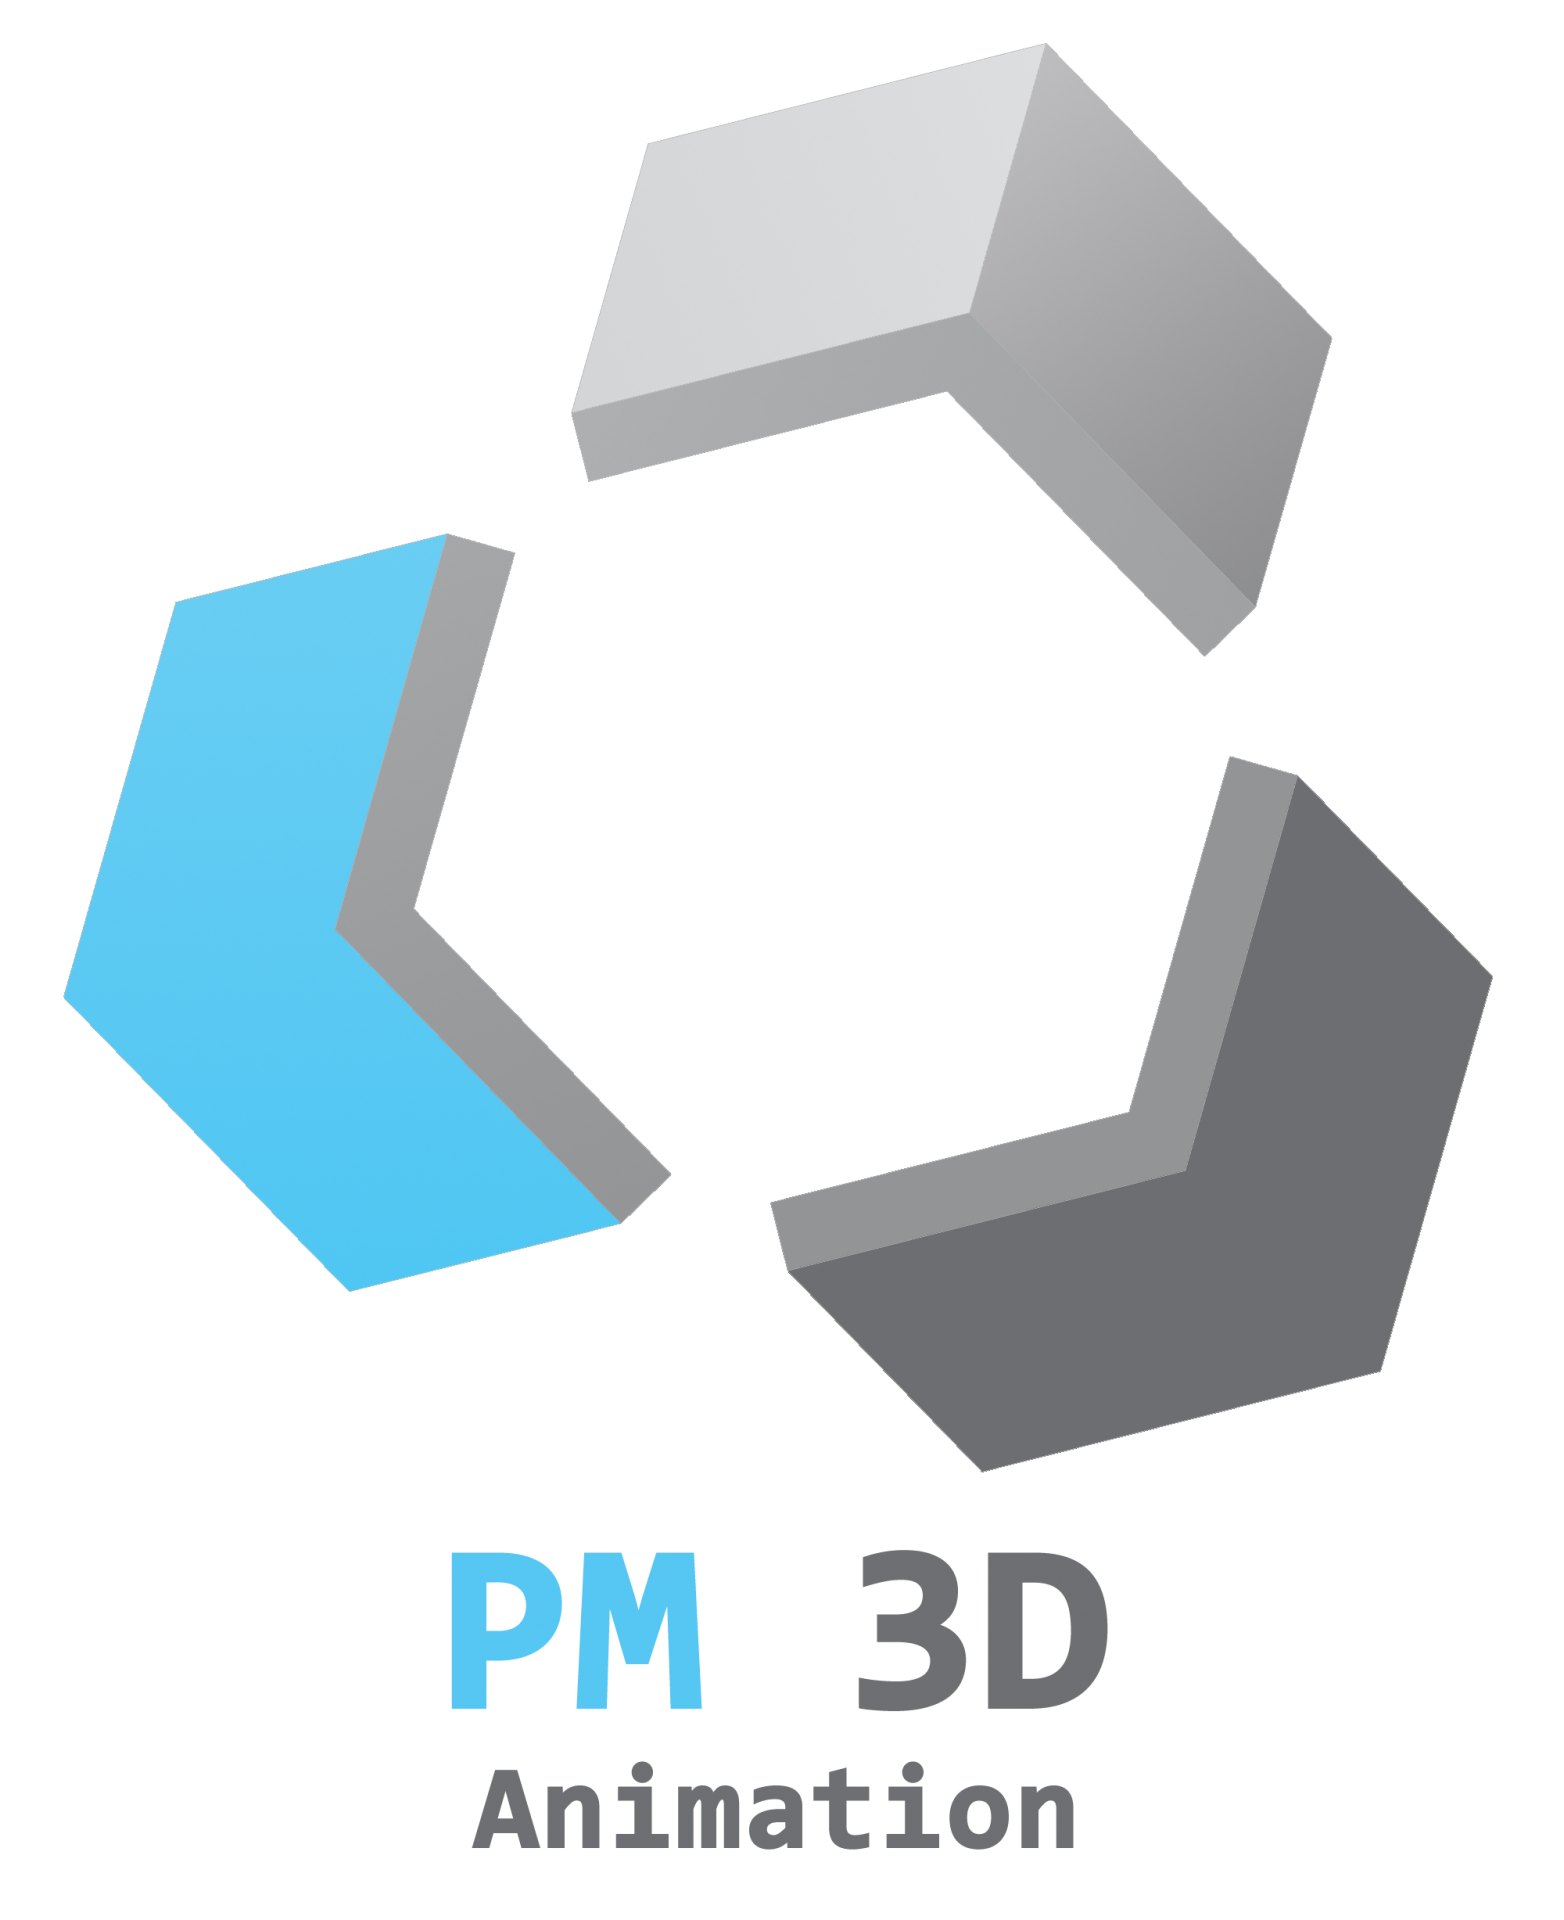 PM 3D Animation